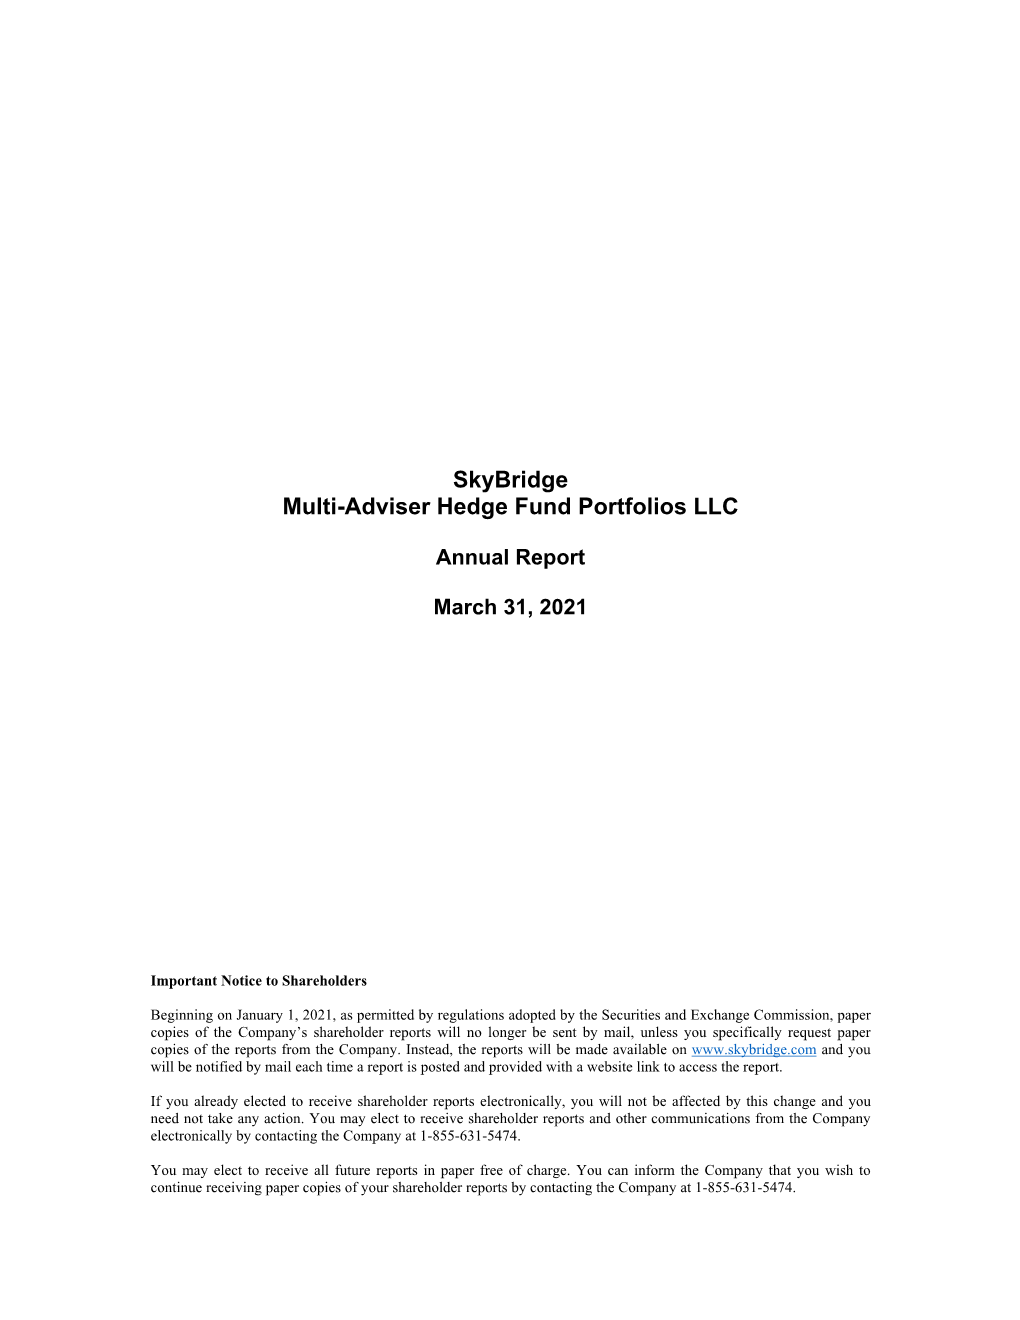 Skybridge Multi-Adviser Hedge Fund Portfolios LLC